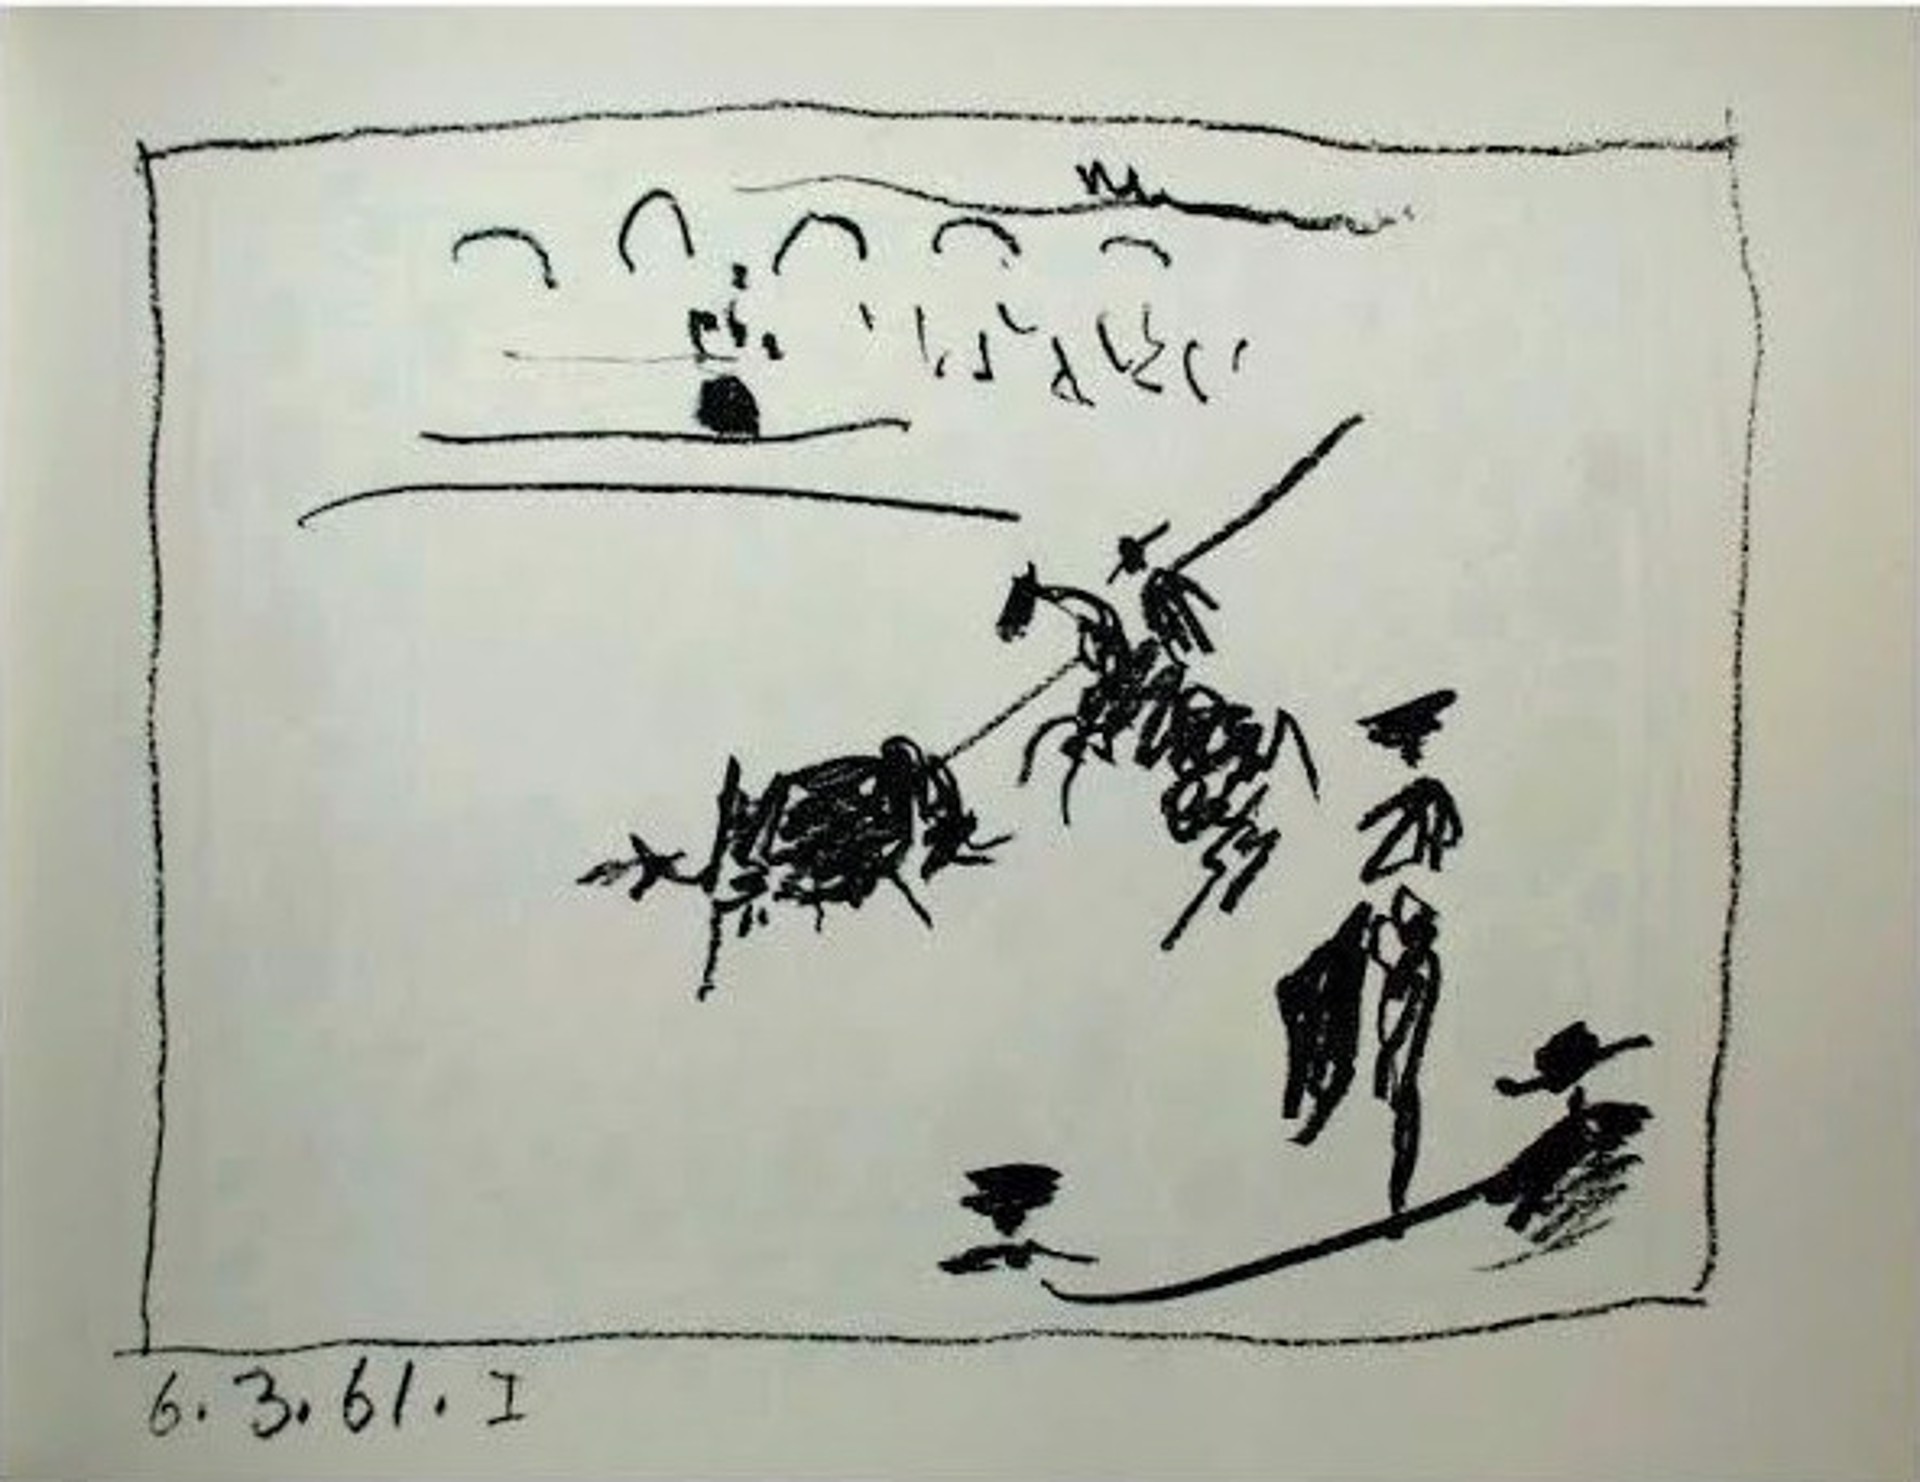 La Pique by Pablo Picasso